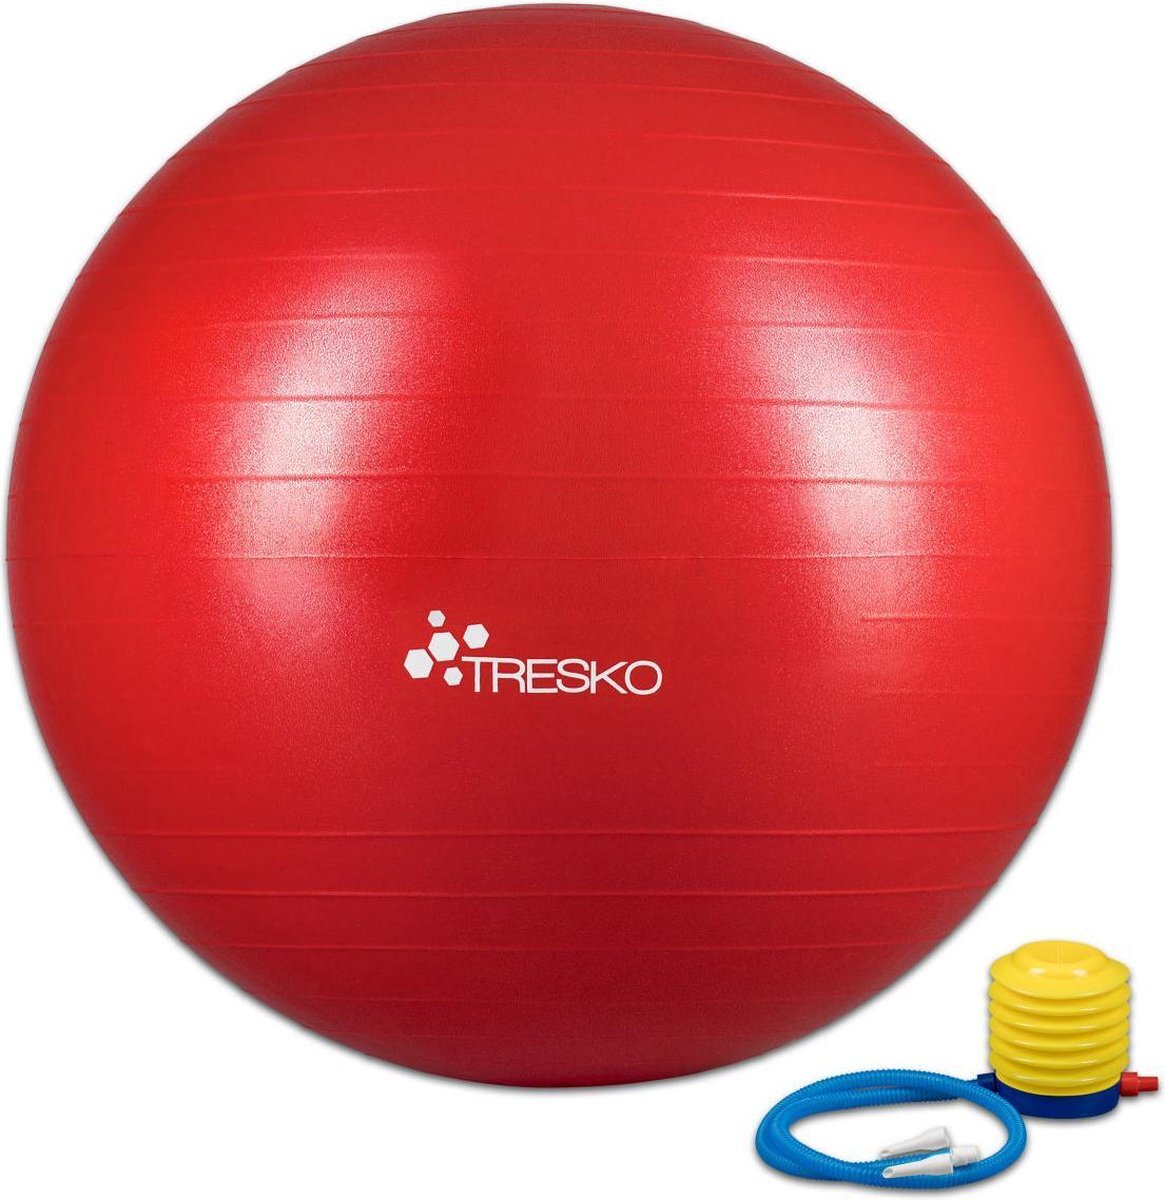 Tresko Fitnessbal met pomp - diameter 75 cm - Rood